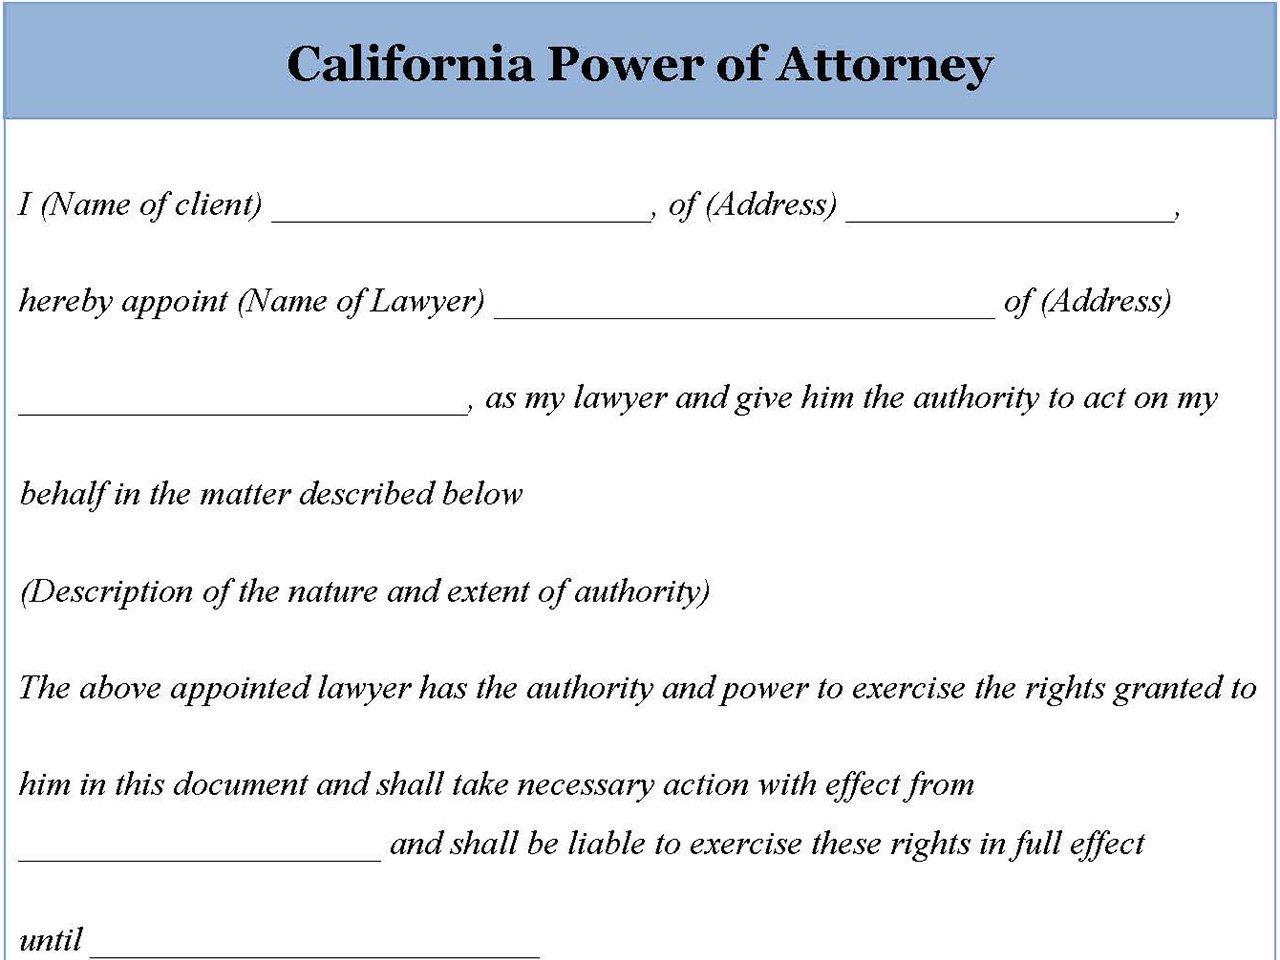 California Power of Attorney Form